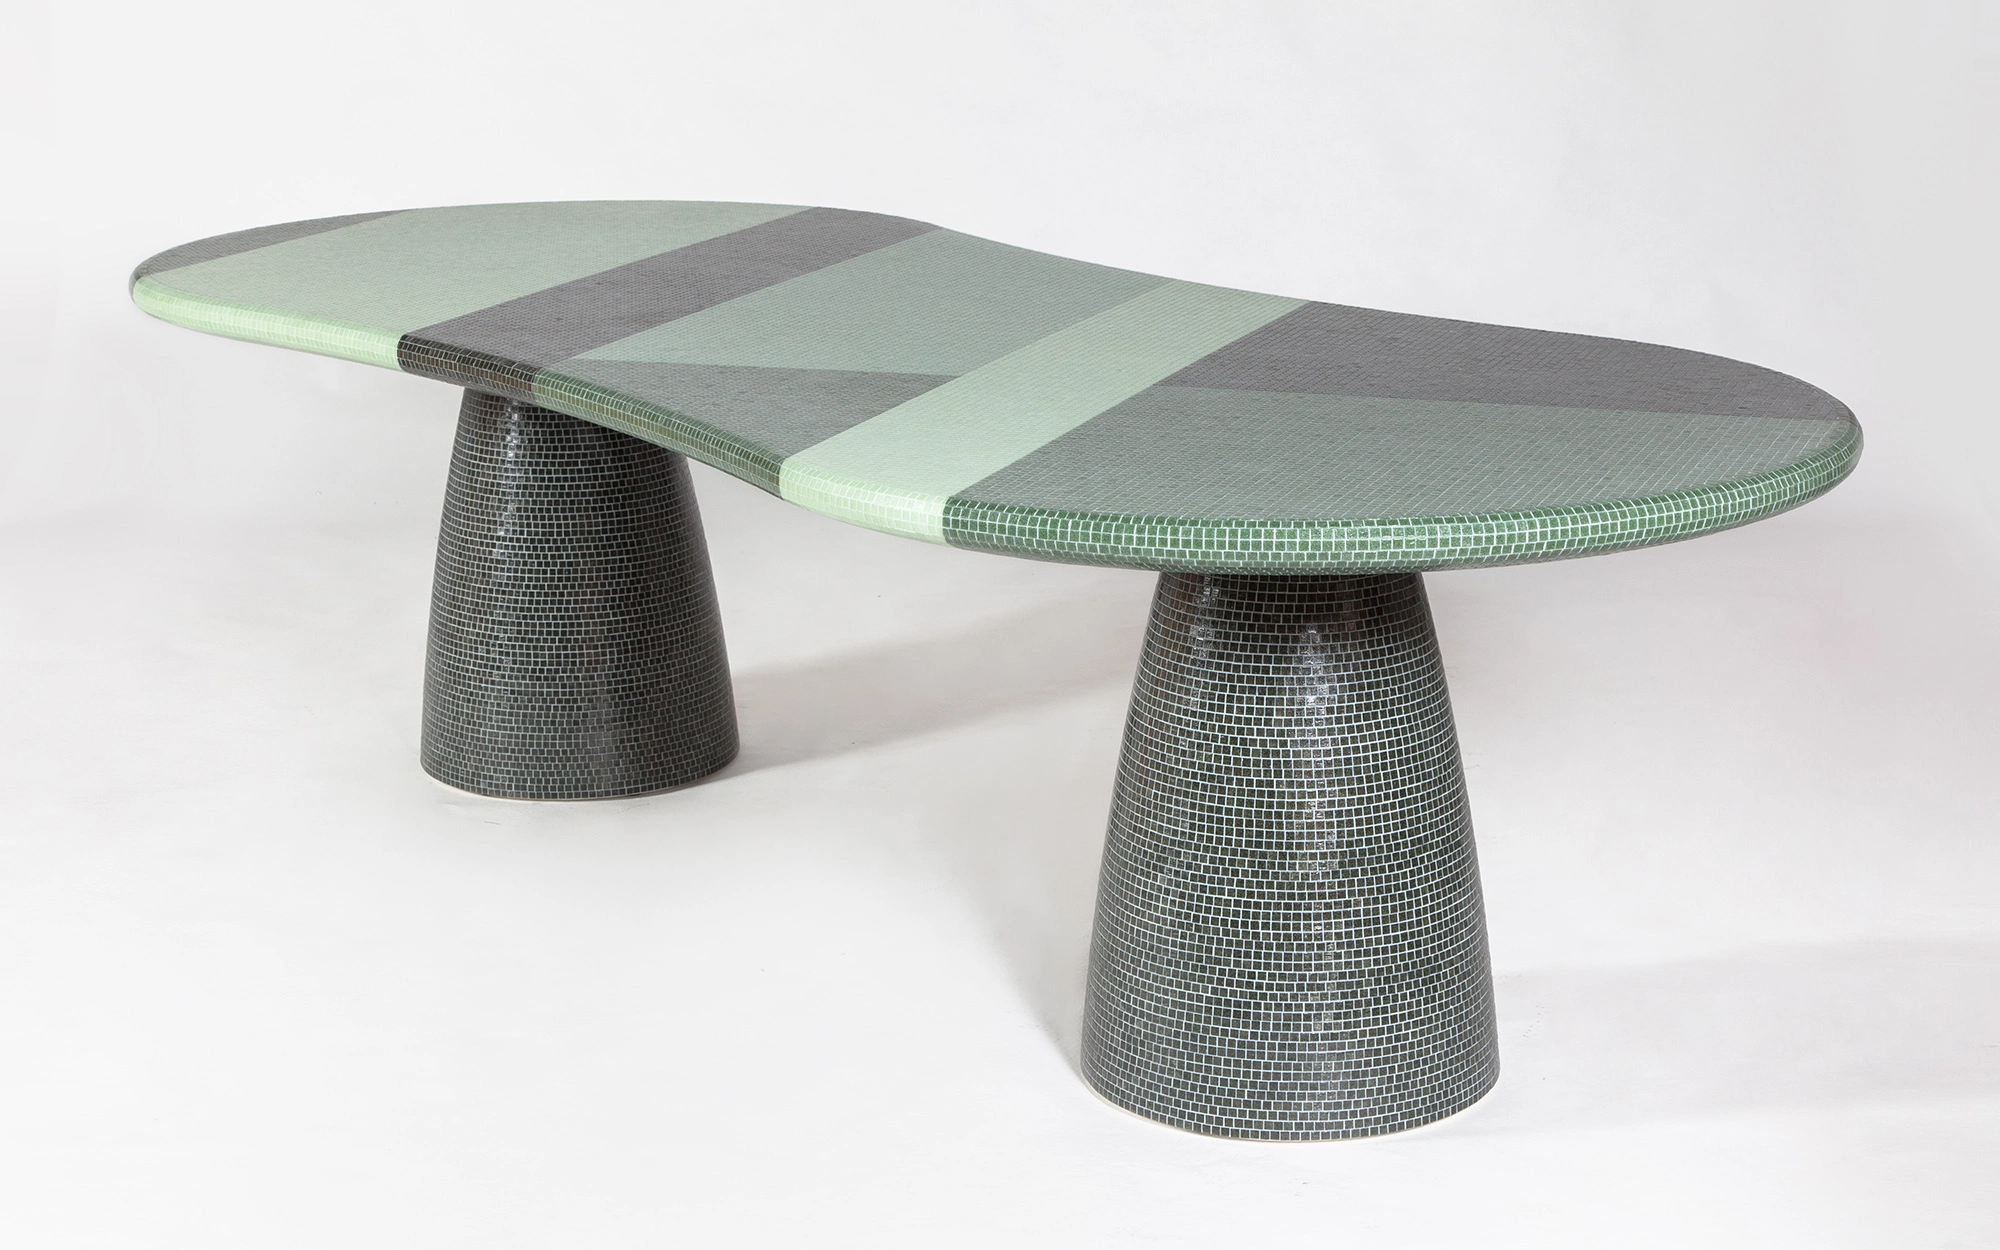 Umbria Dining Table - Alessandro Mendini - Coffee table - Galerie kreo